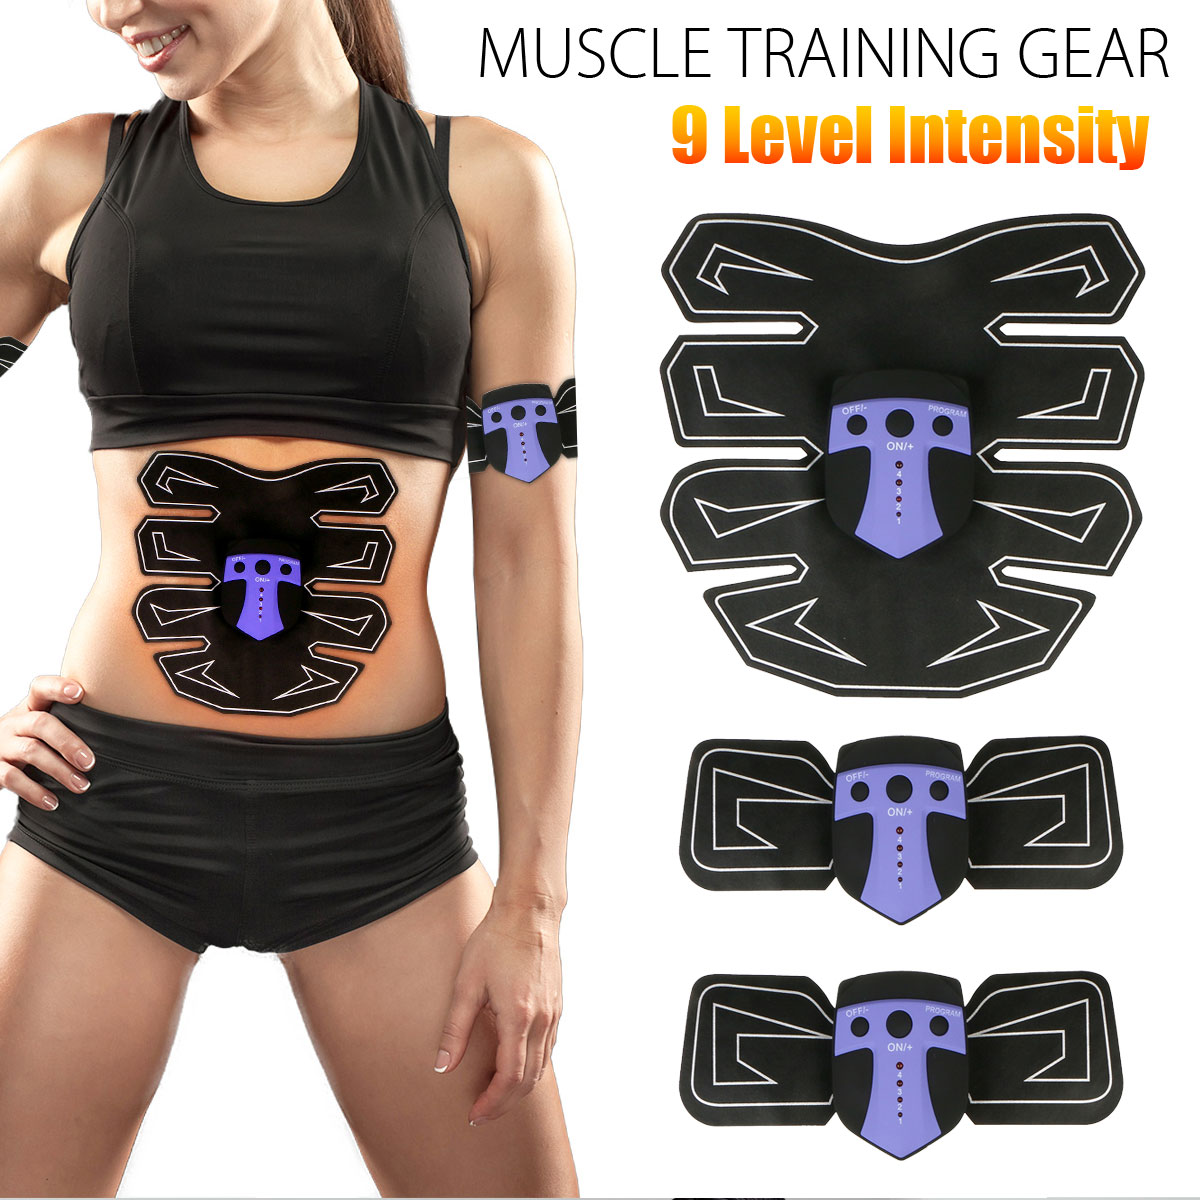 Abdomen-Arm-Muscle-EMS-Training-Gear-Black-Technology-Electrical-Body-Shape-Trainer-1265048